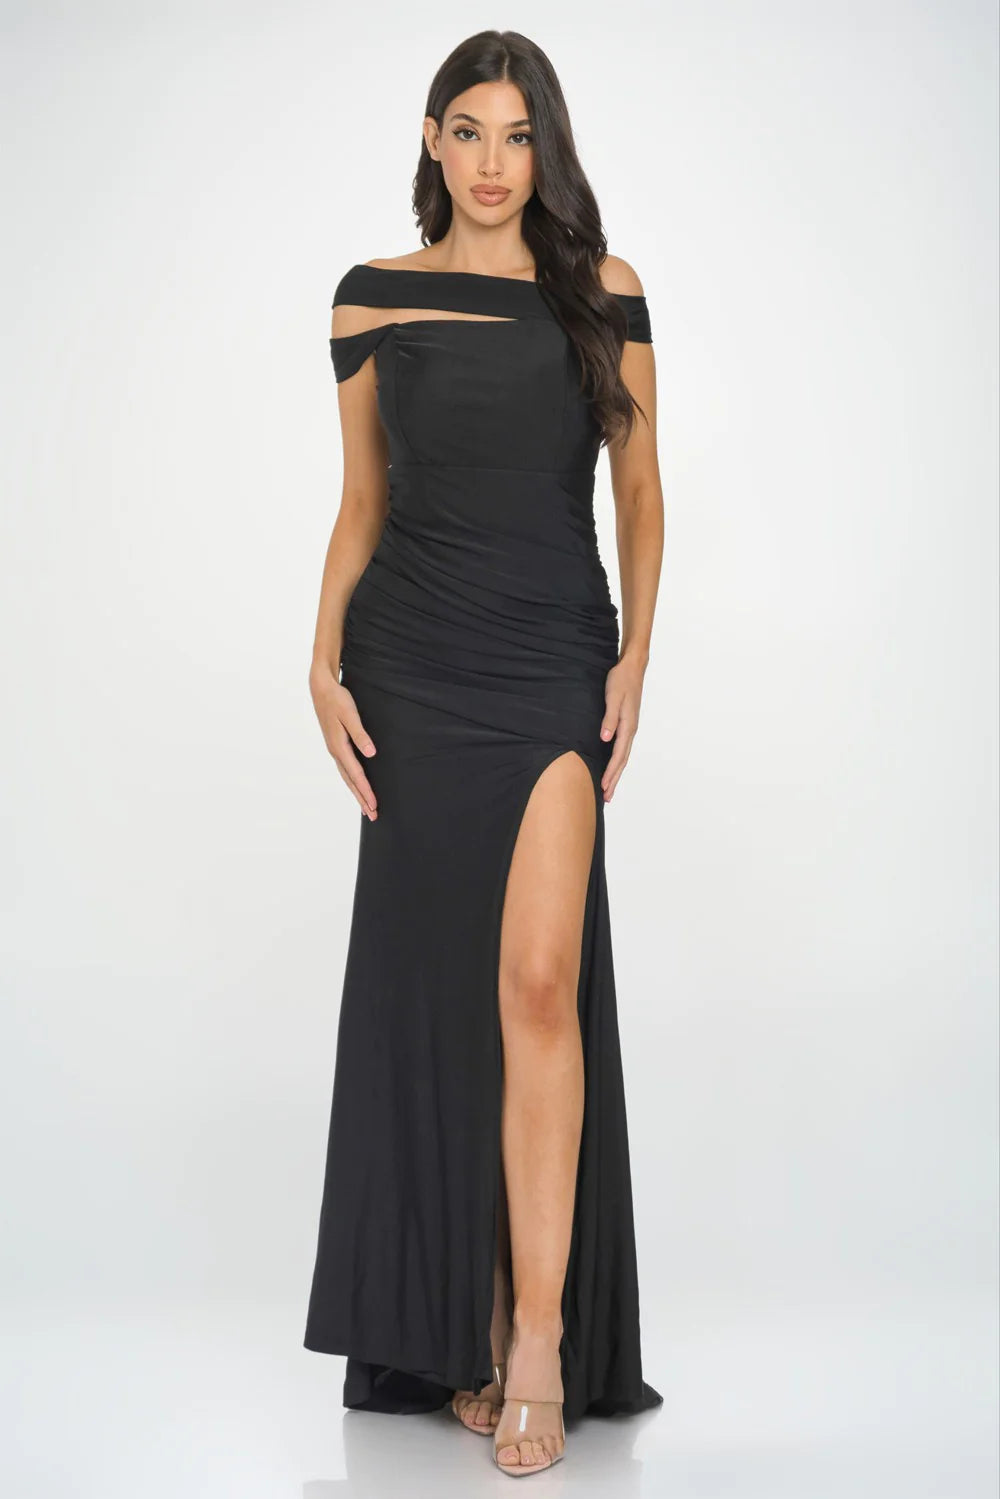 The Yvette Gown in Black